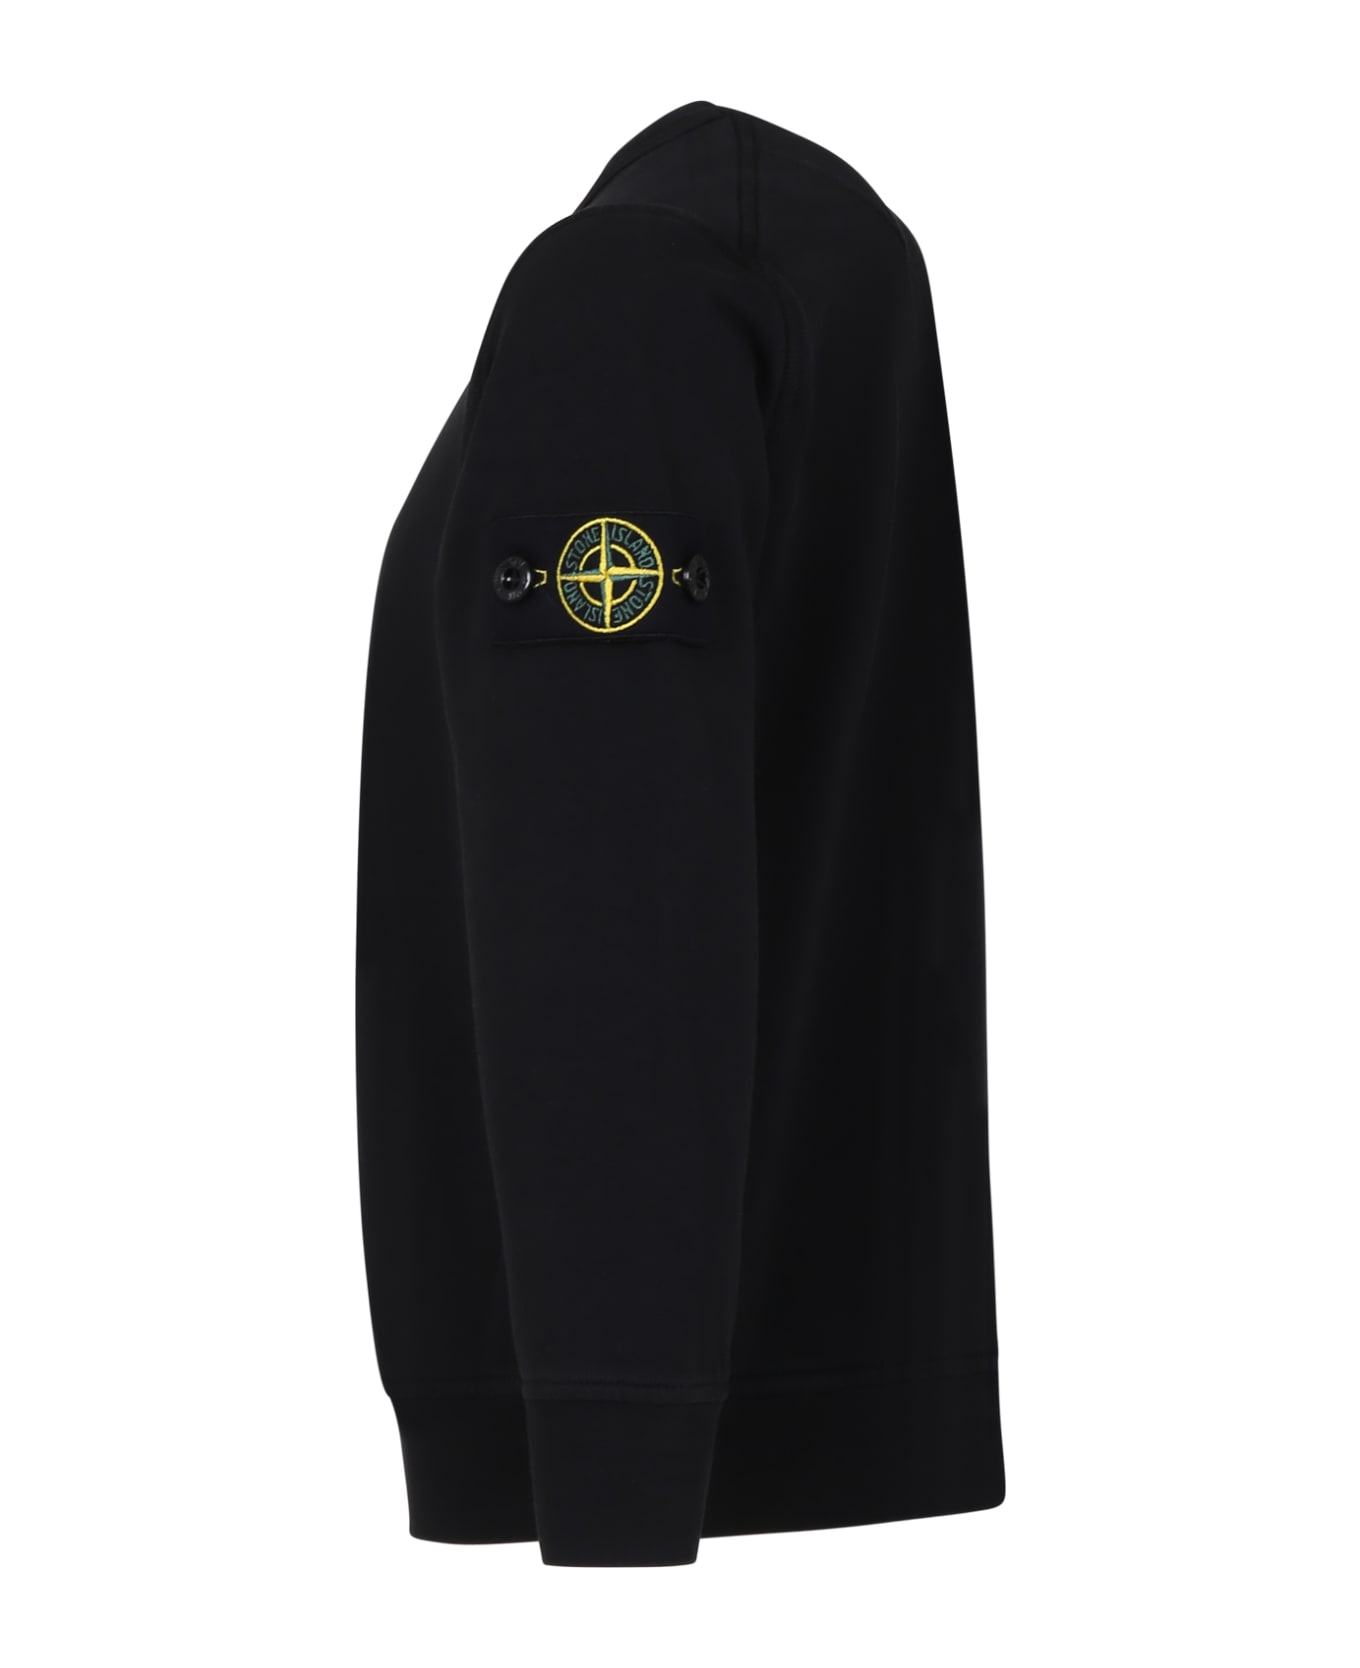 Stone Island Junior Black Sweatshirt For Boy With Iconic Logo - Black ニットウェア＆スウェットシャツ